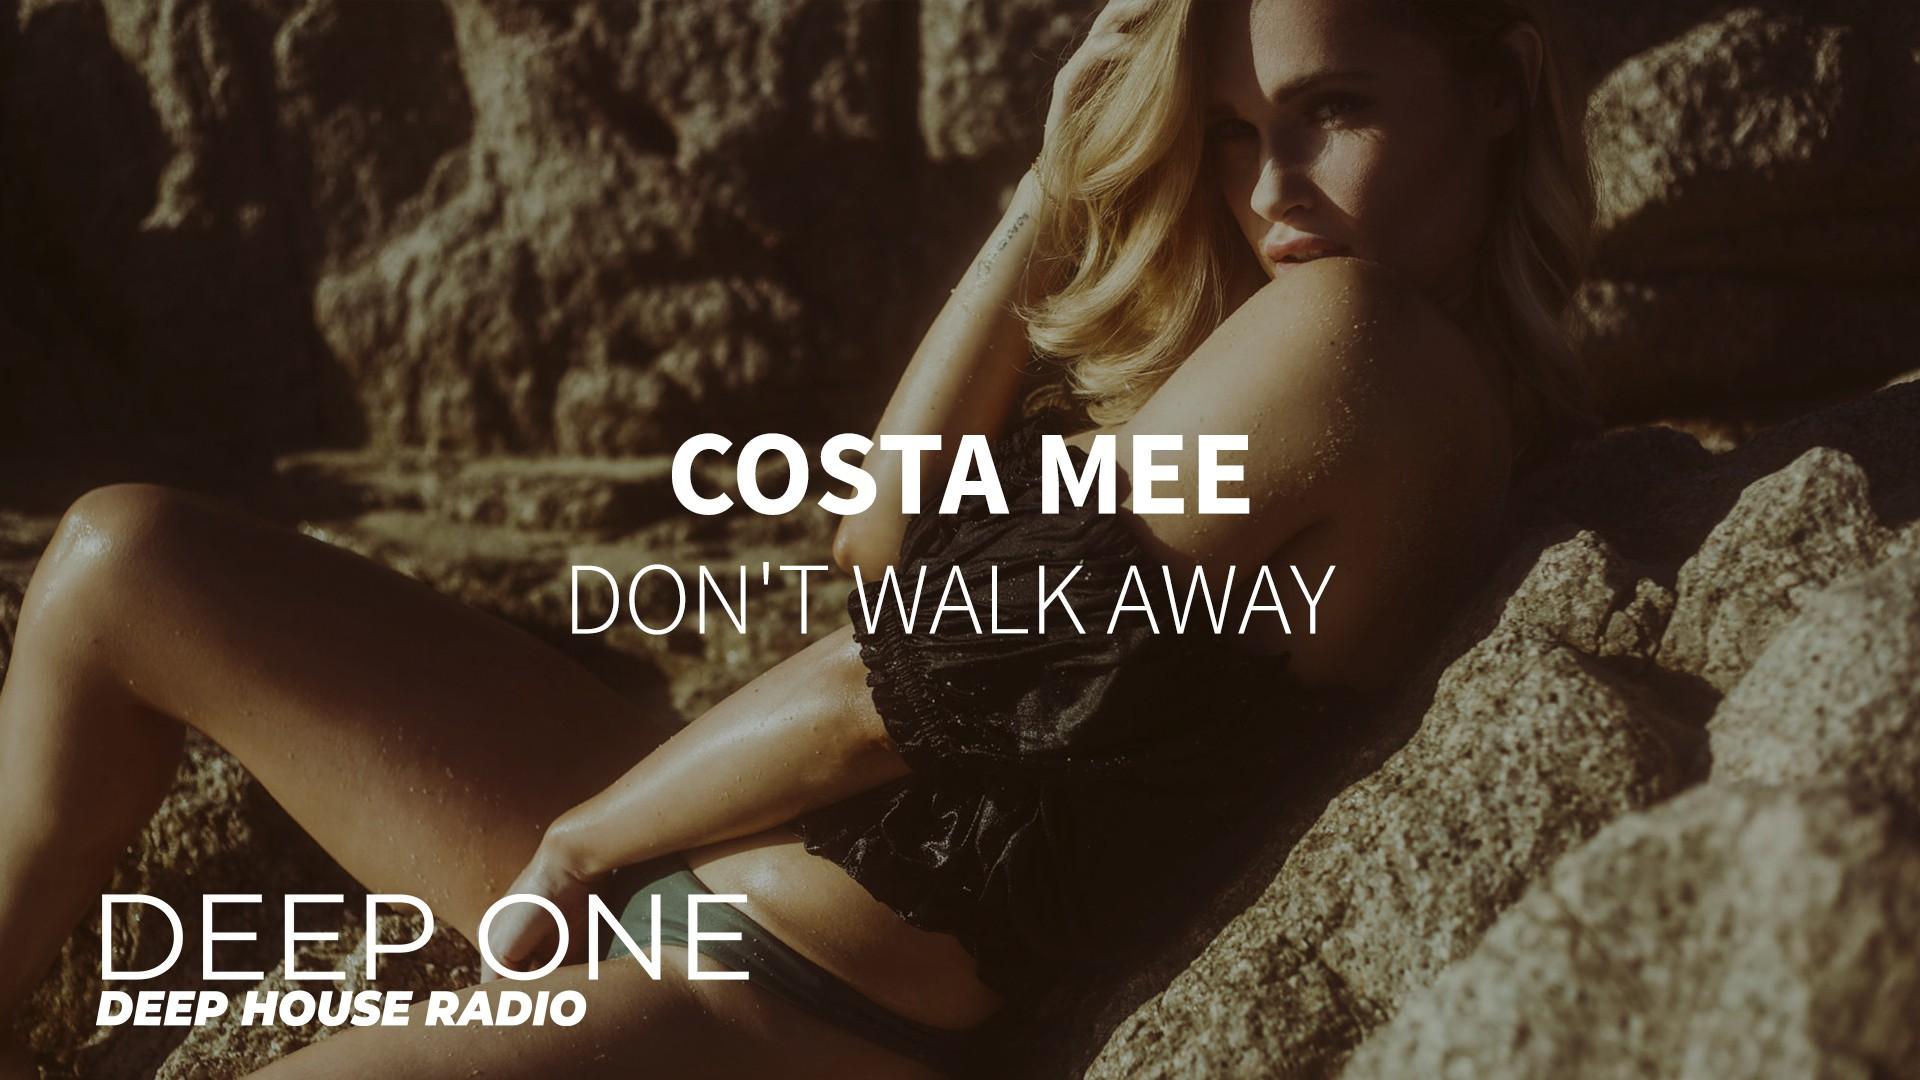 Costa mee love. Costa mee певица. Costa mee - Addiction (Original Mix). Hold on to me - Costa mee.